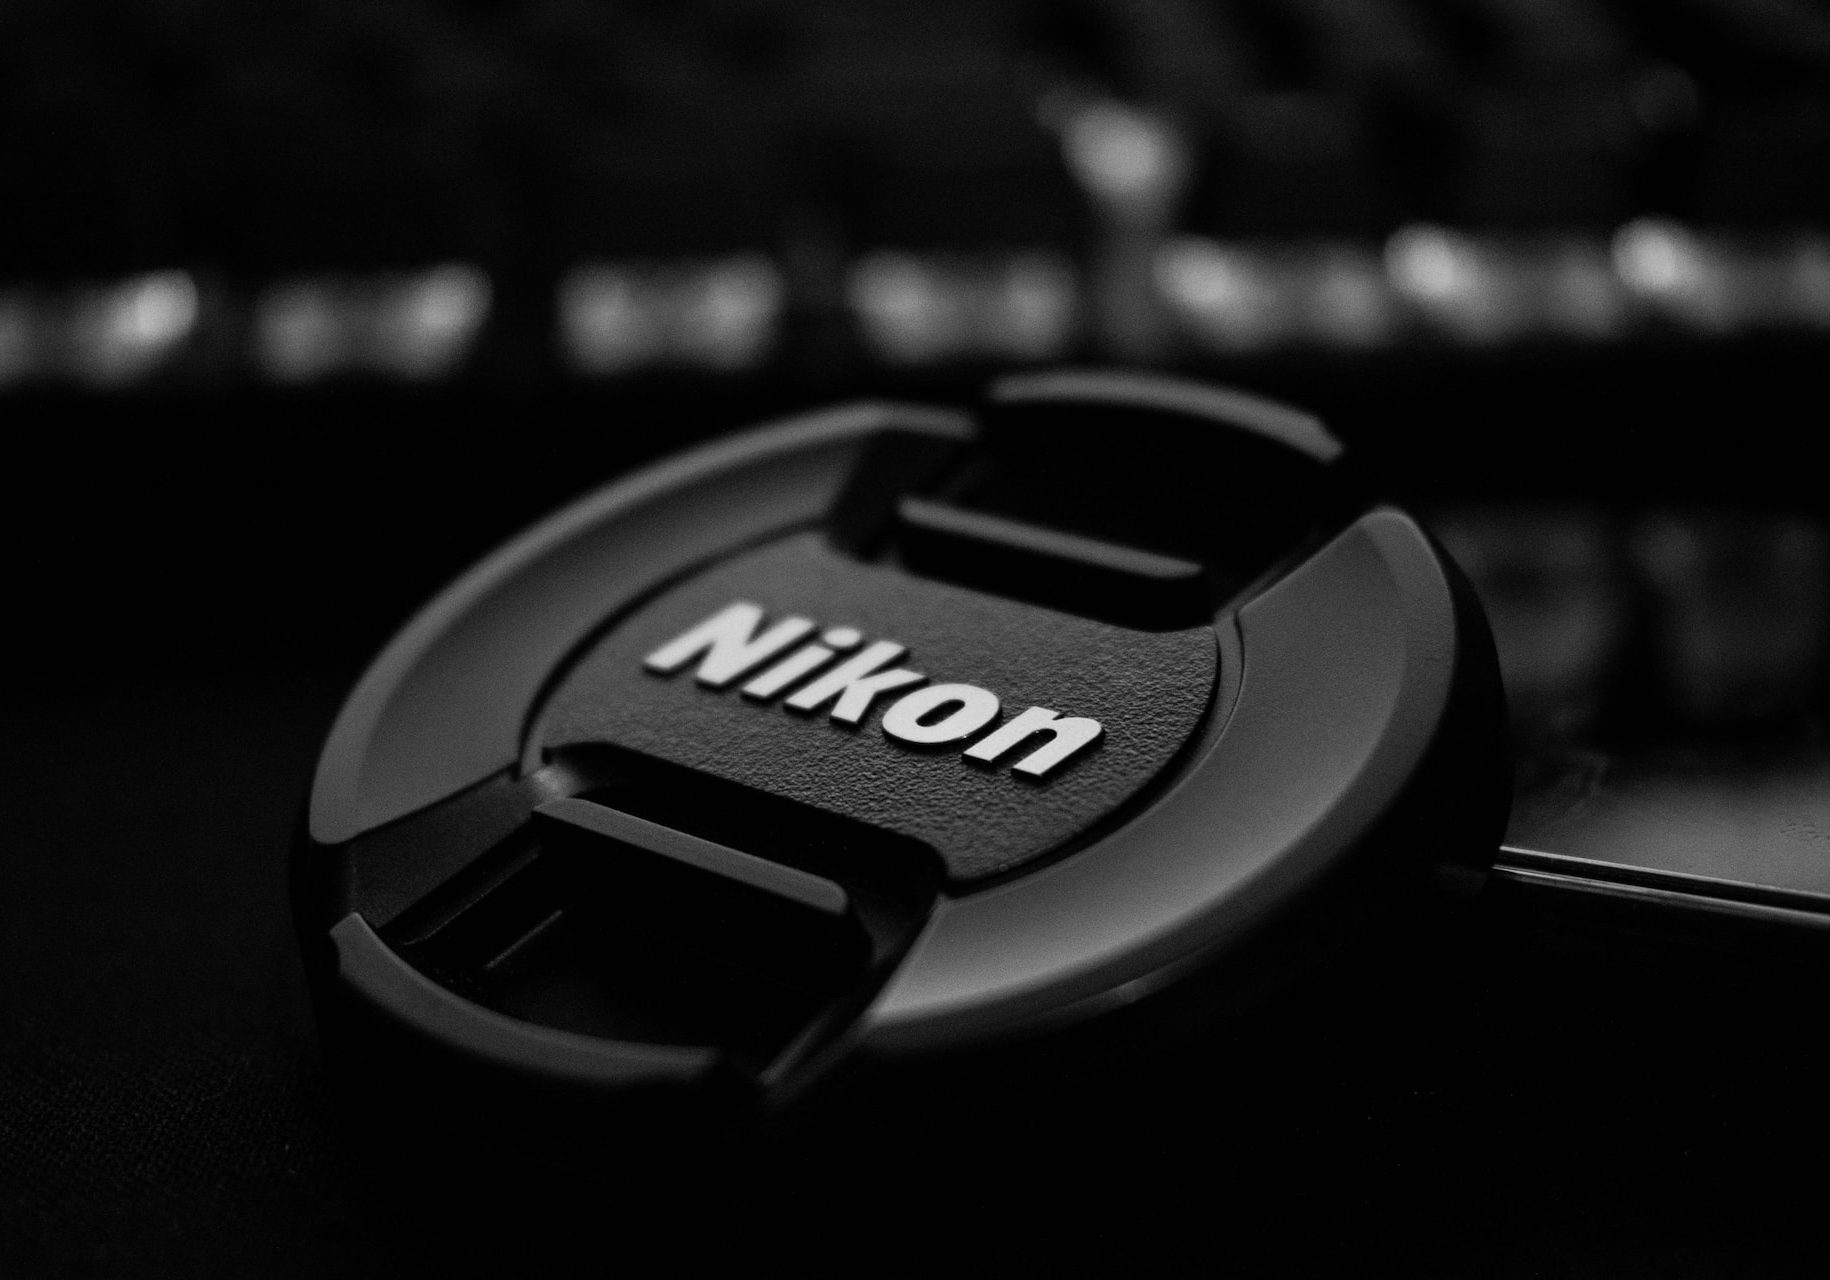 Rumored 67MP Nikon camera